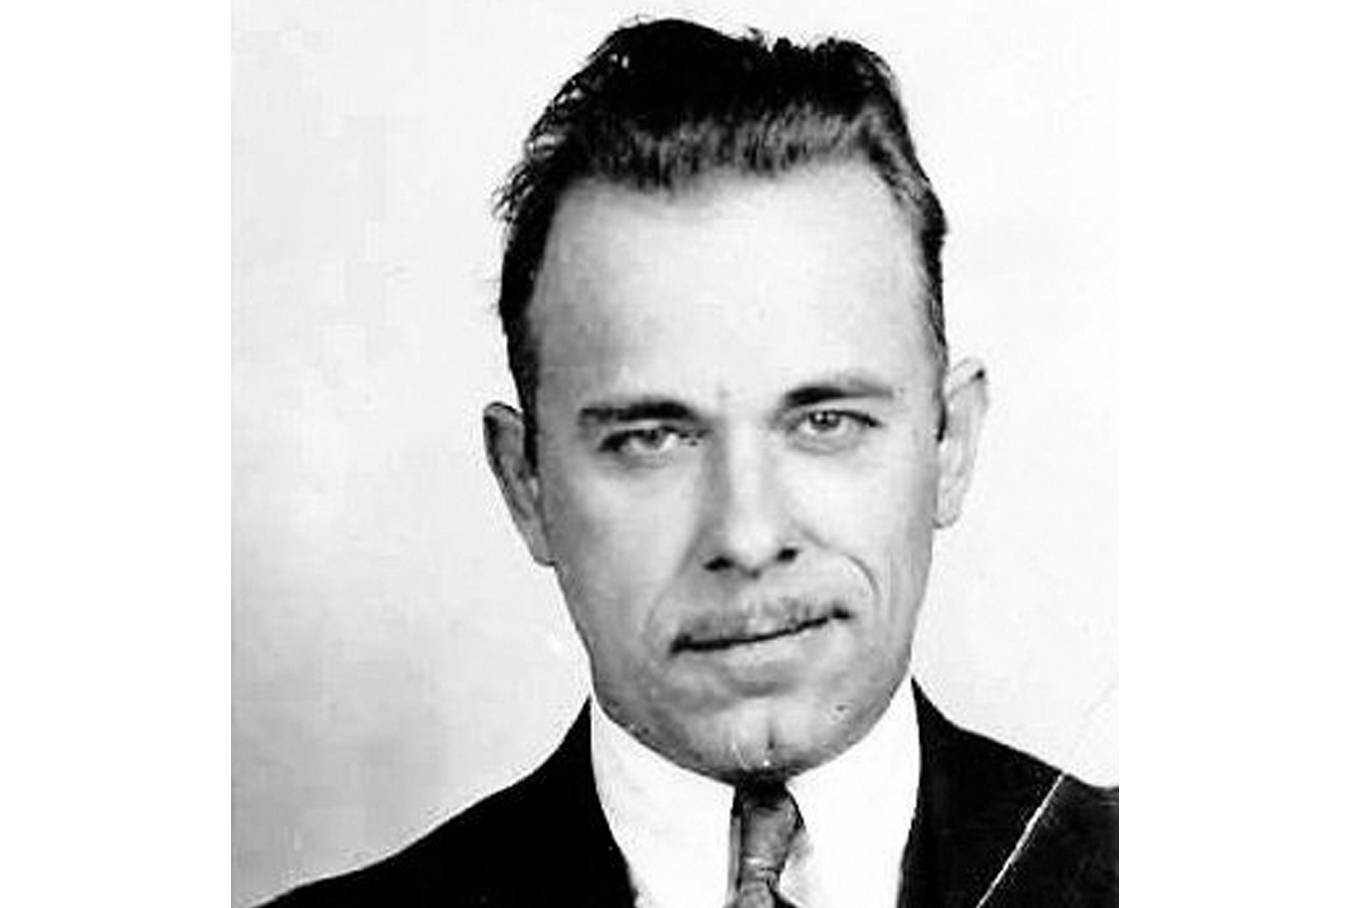 A mugshot of gangster John Dillinger.